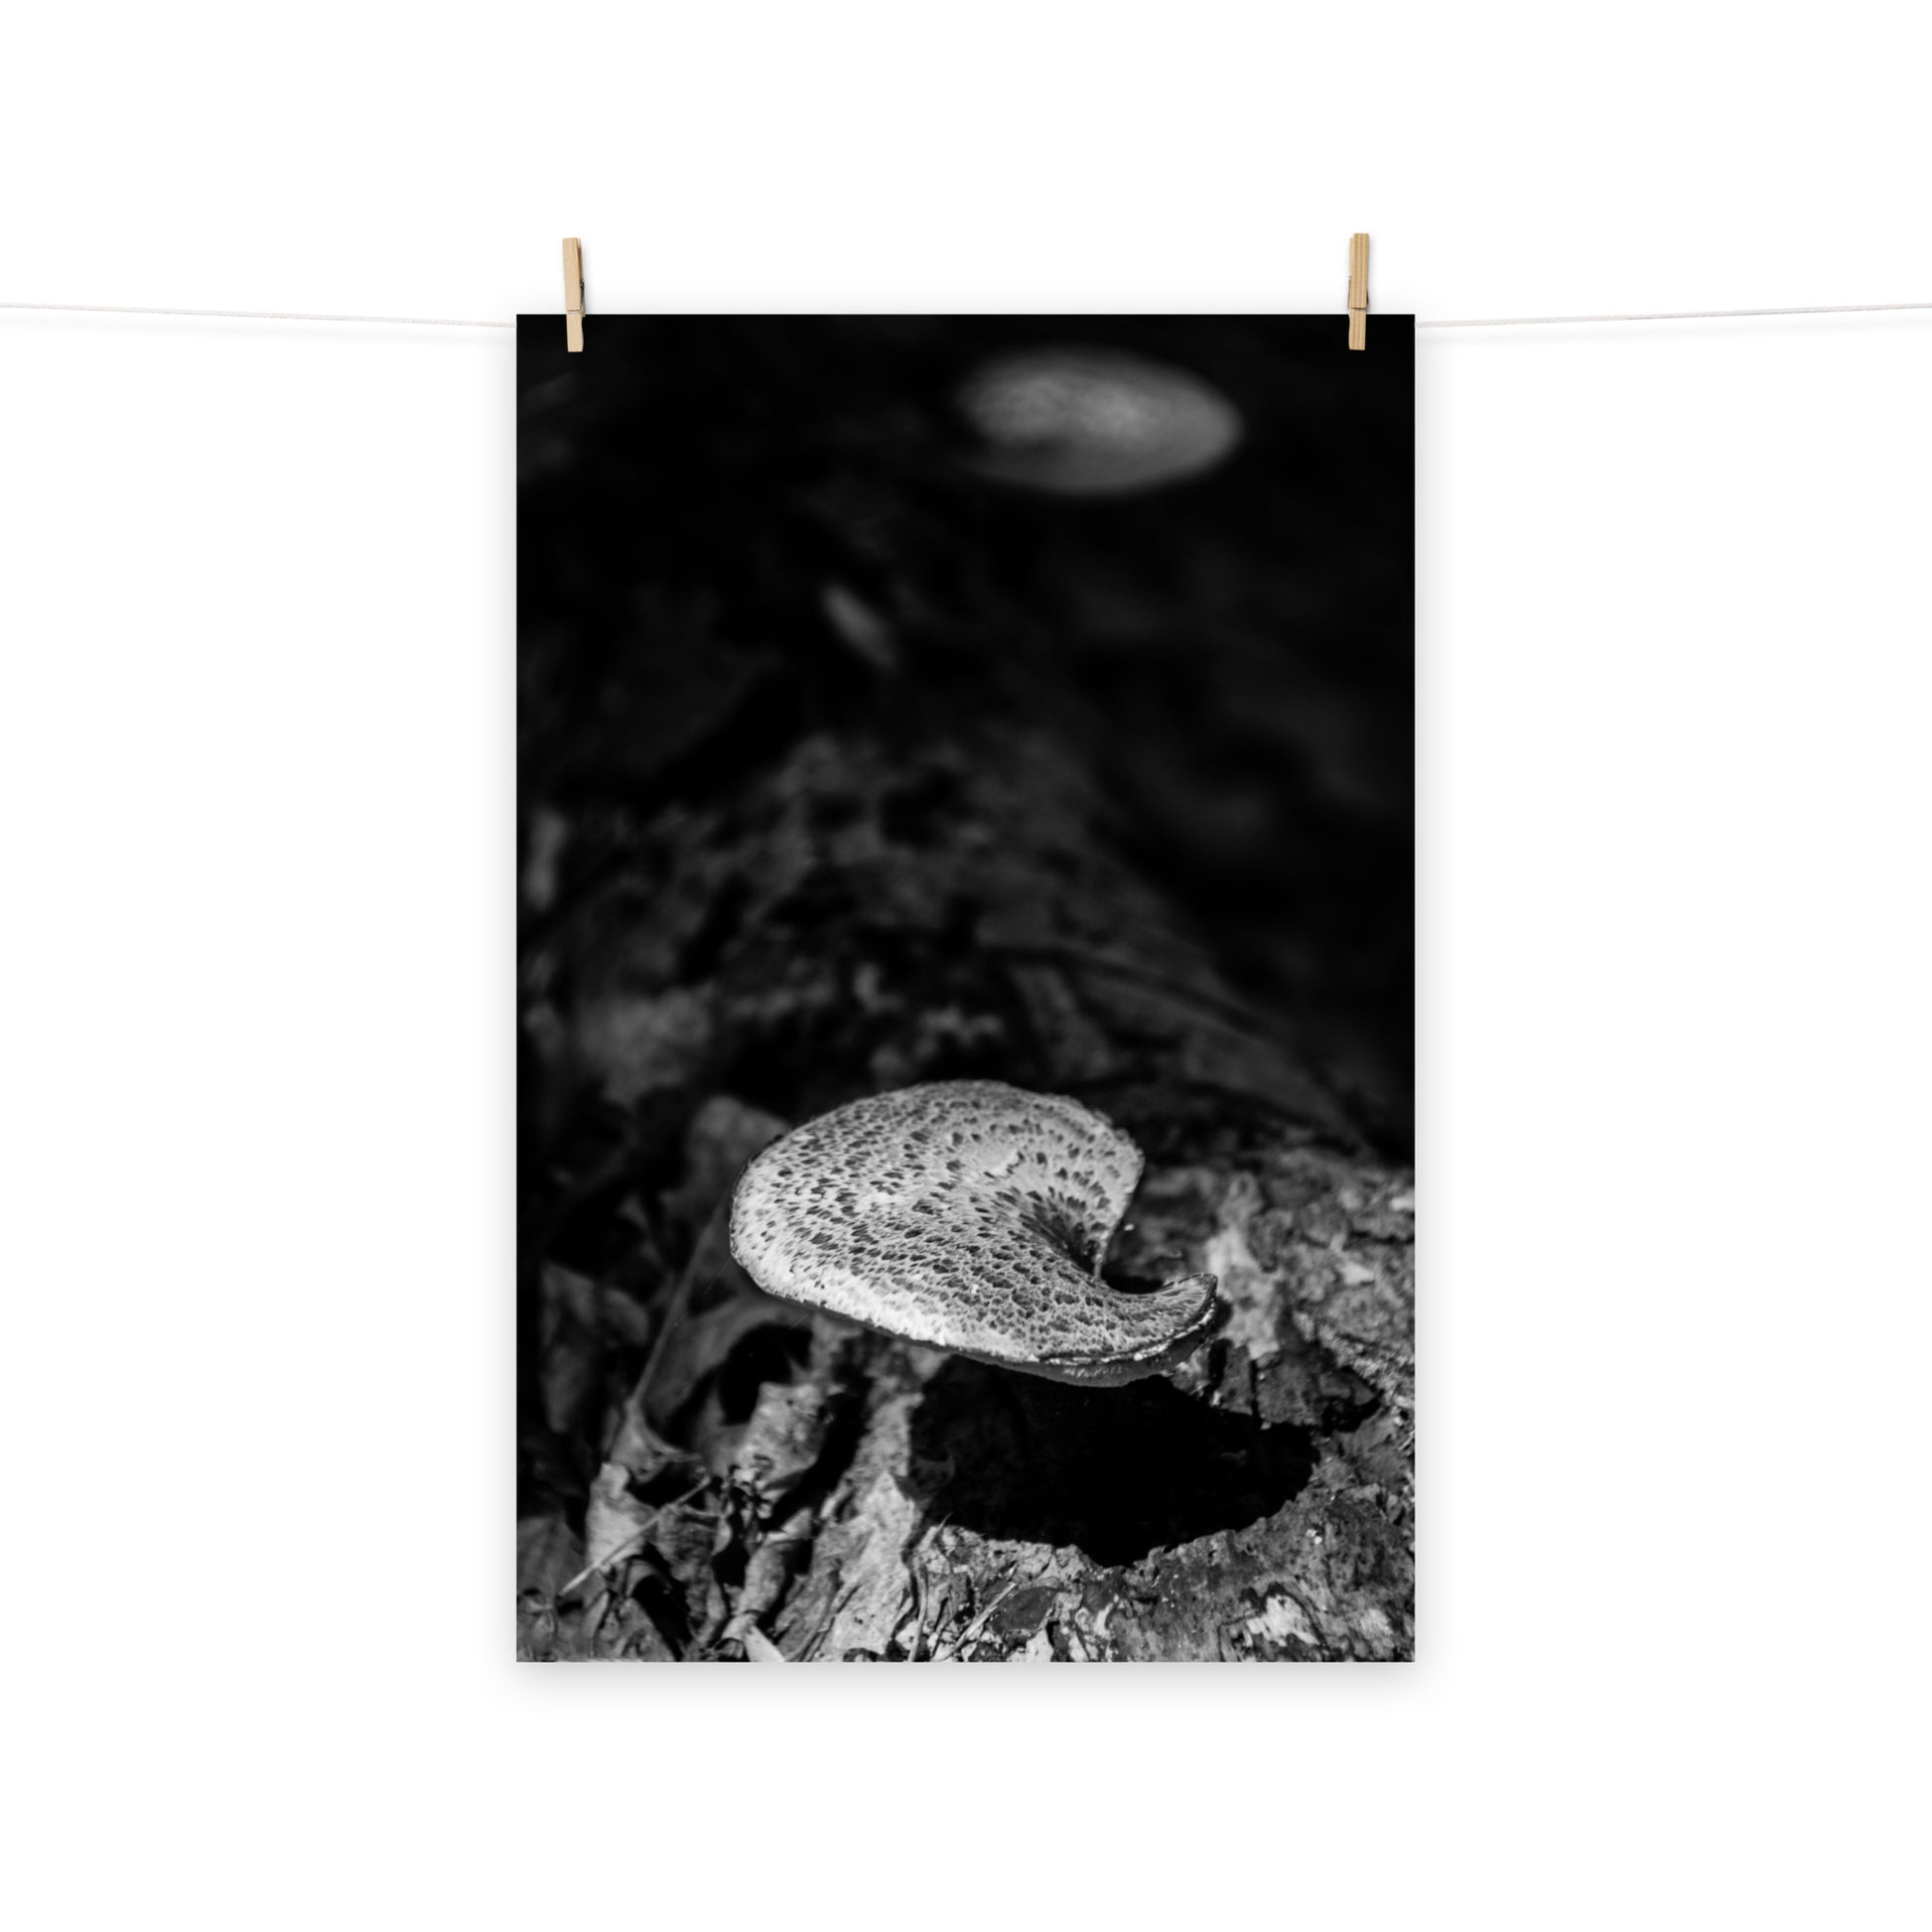 Rustic Botanical Prints: Mushroom on Log Black and White - Botanical / Plant / Nature Photograph Loose / Unframed / Frameable / Frameless Wall Art Print - Artwork